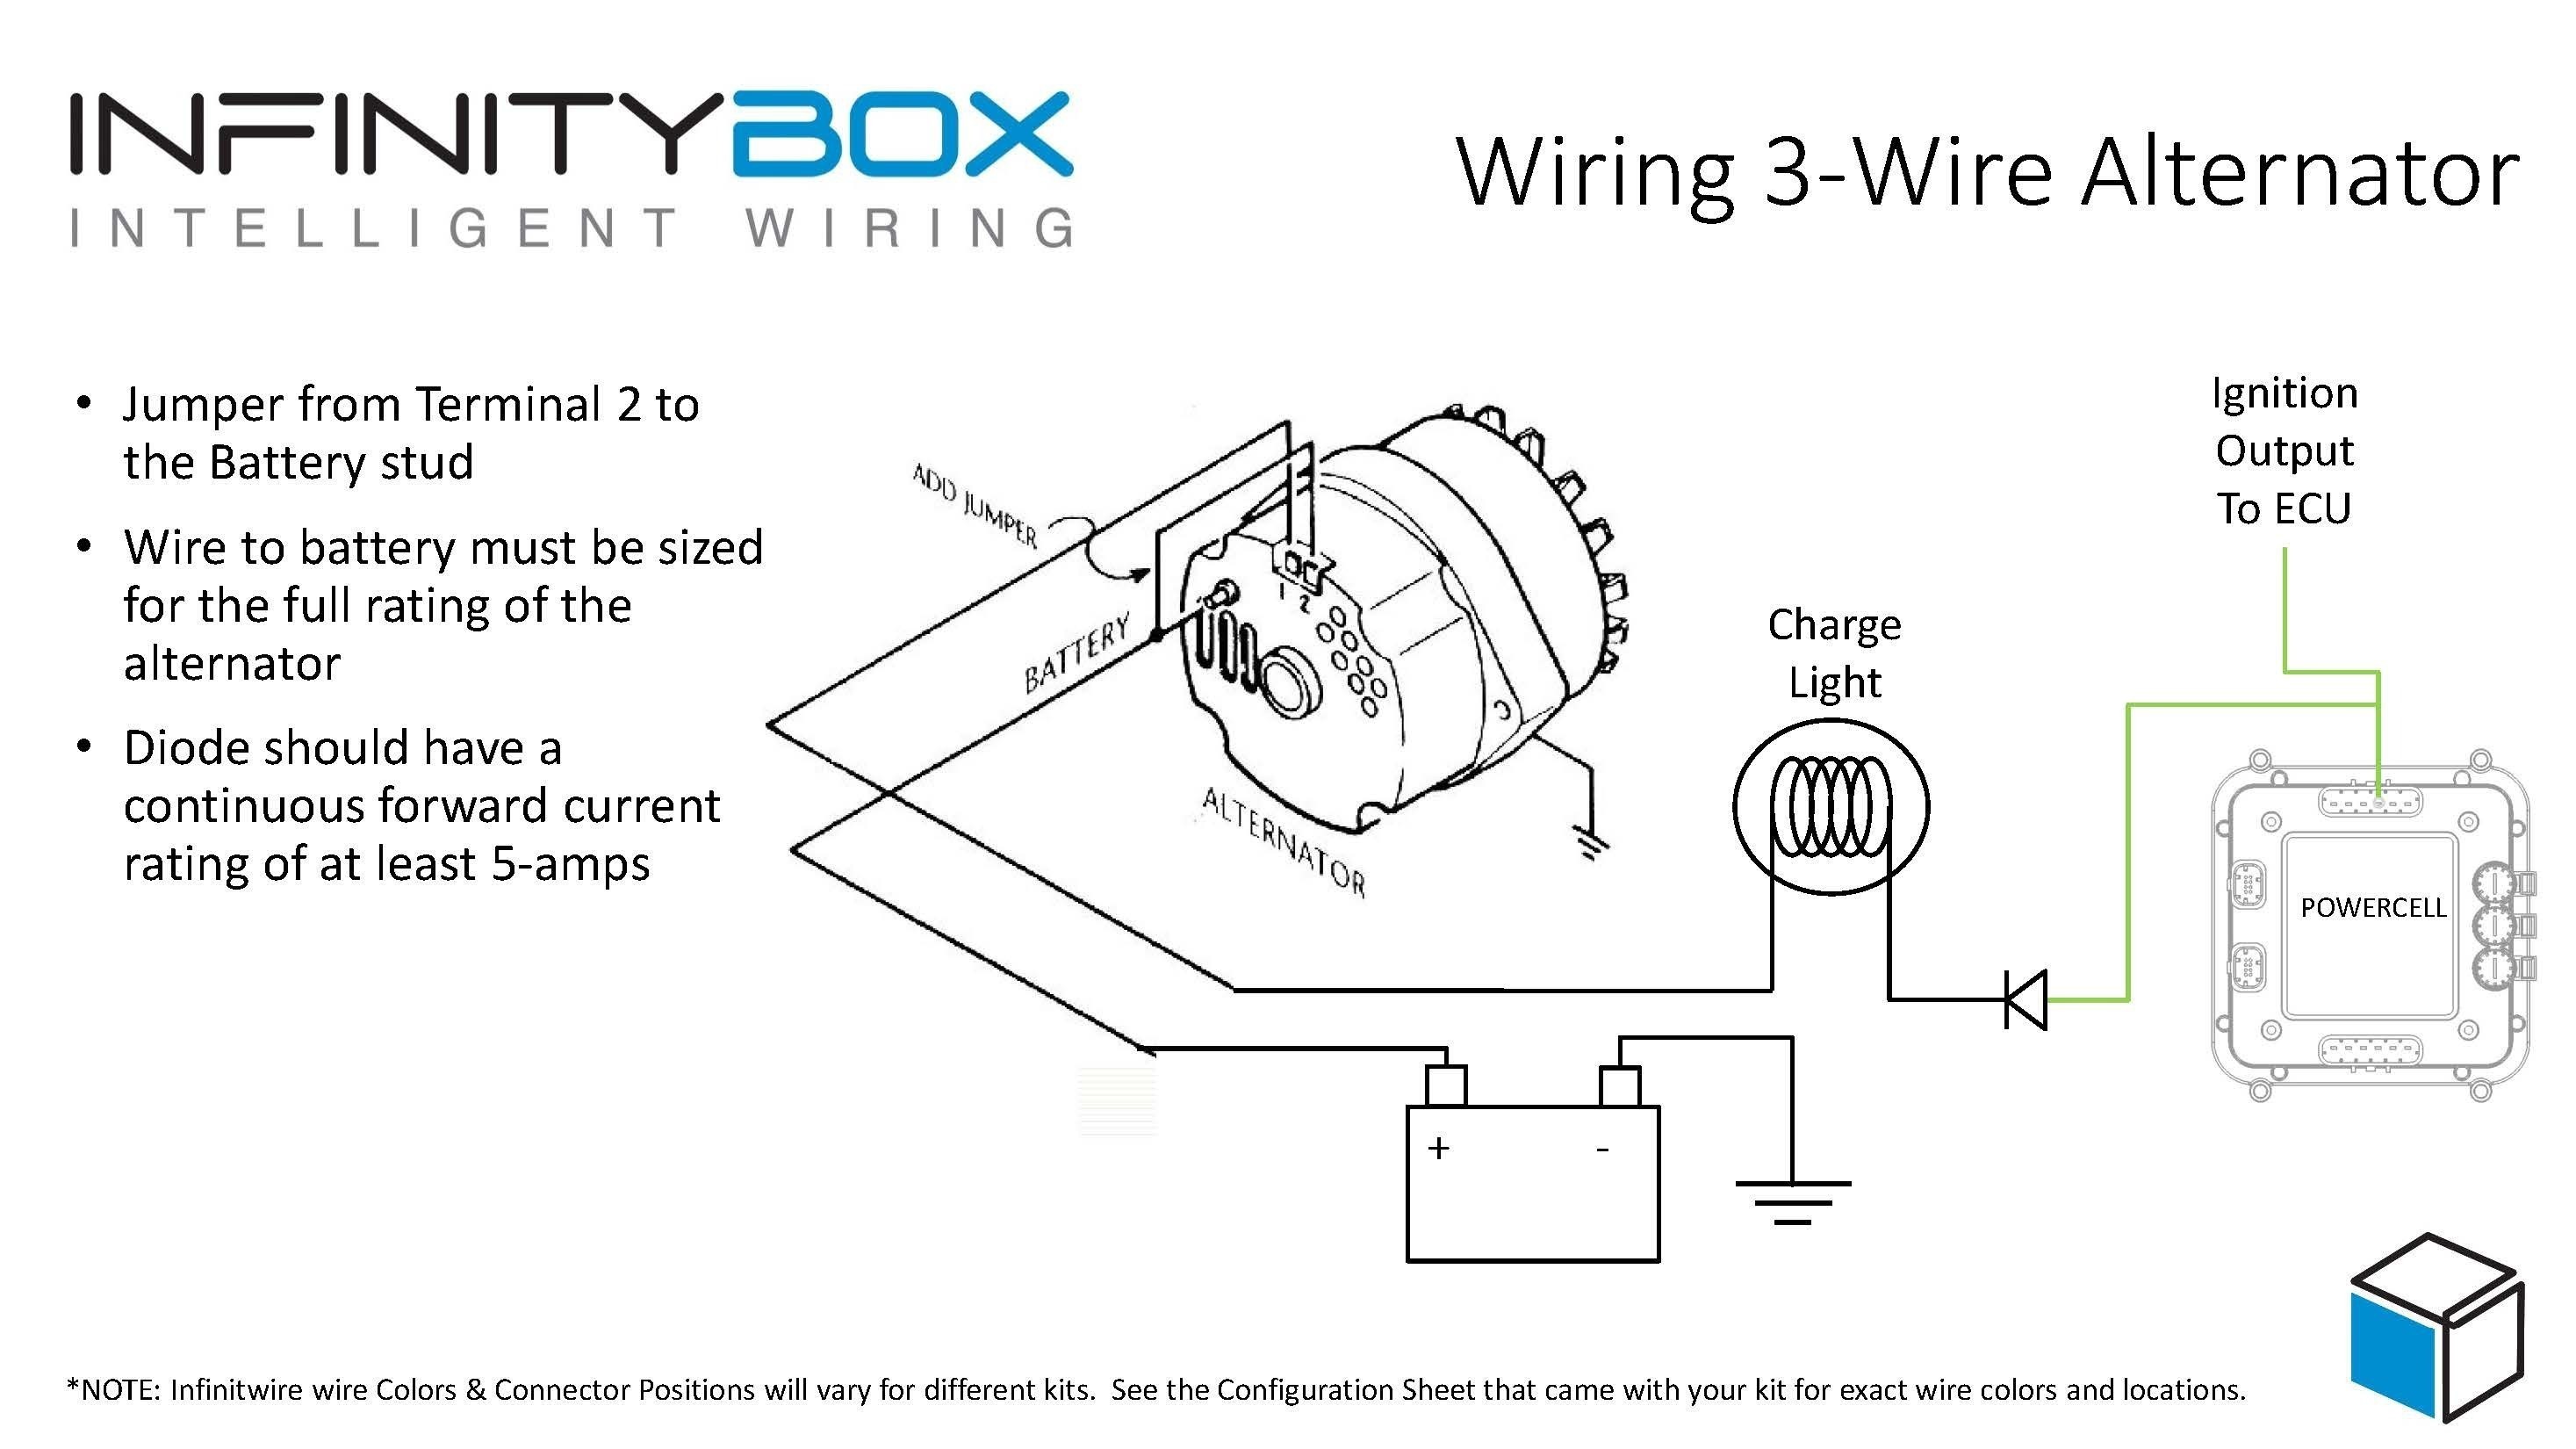 Gm Alternator Wiring Diagram Inspirational 2 Wire Alternator Wiring Diagram Awesome 3 Wire Alternator Wiring